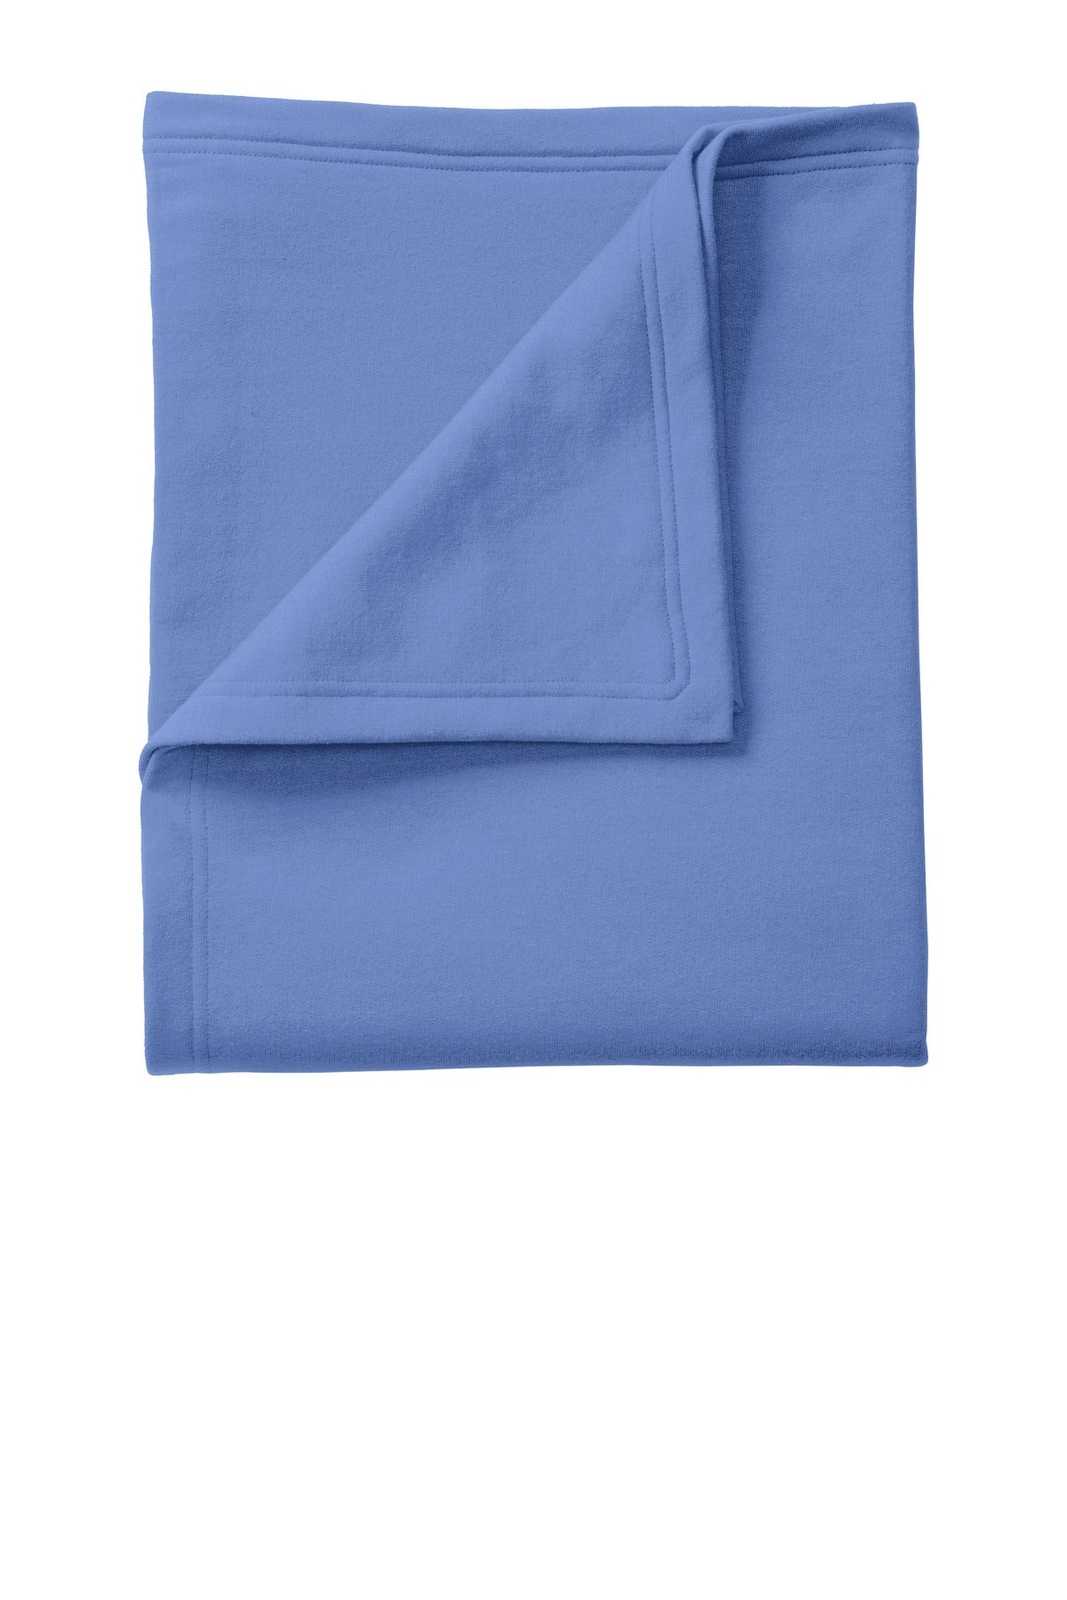 Port &amp; Company BP78 Core Fleece Sweatshirt Blanket - Carolina Blue - HIT a Double - 1